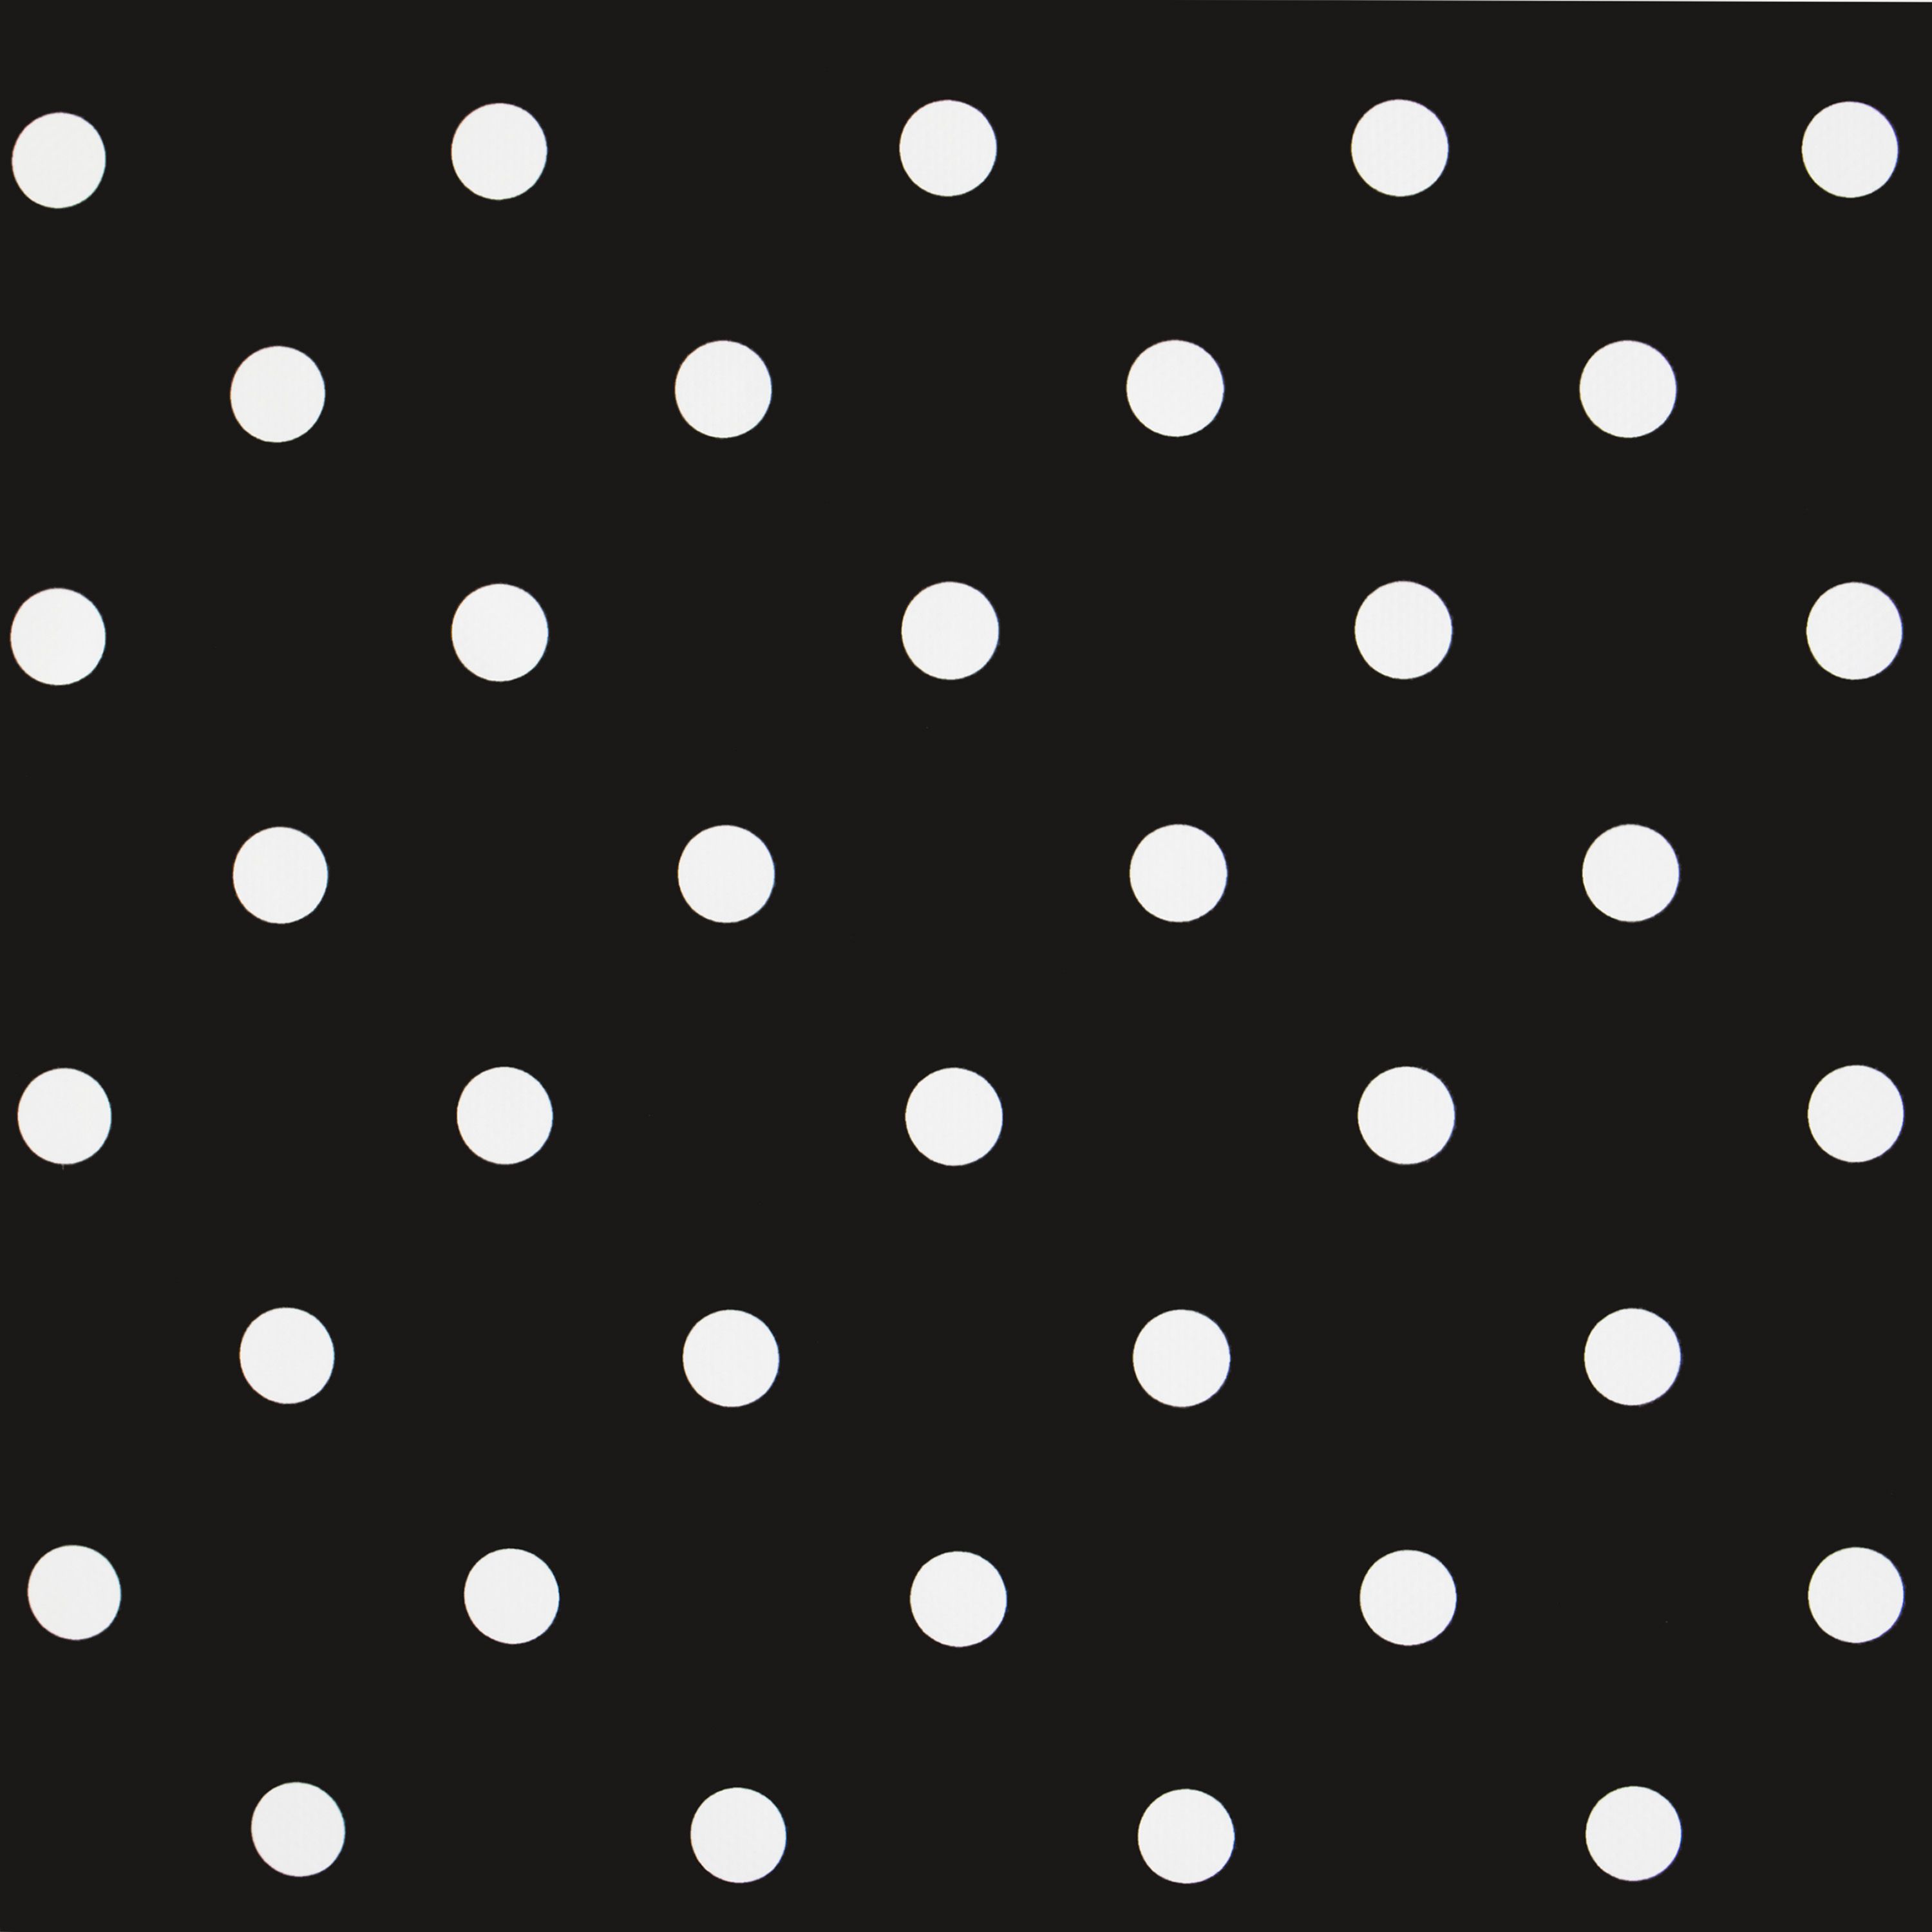 Black And White Polka Dot Desktop Background